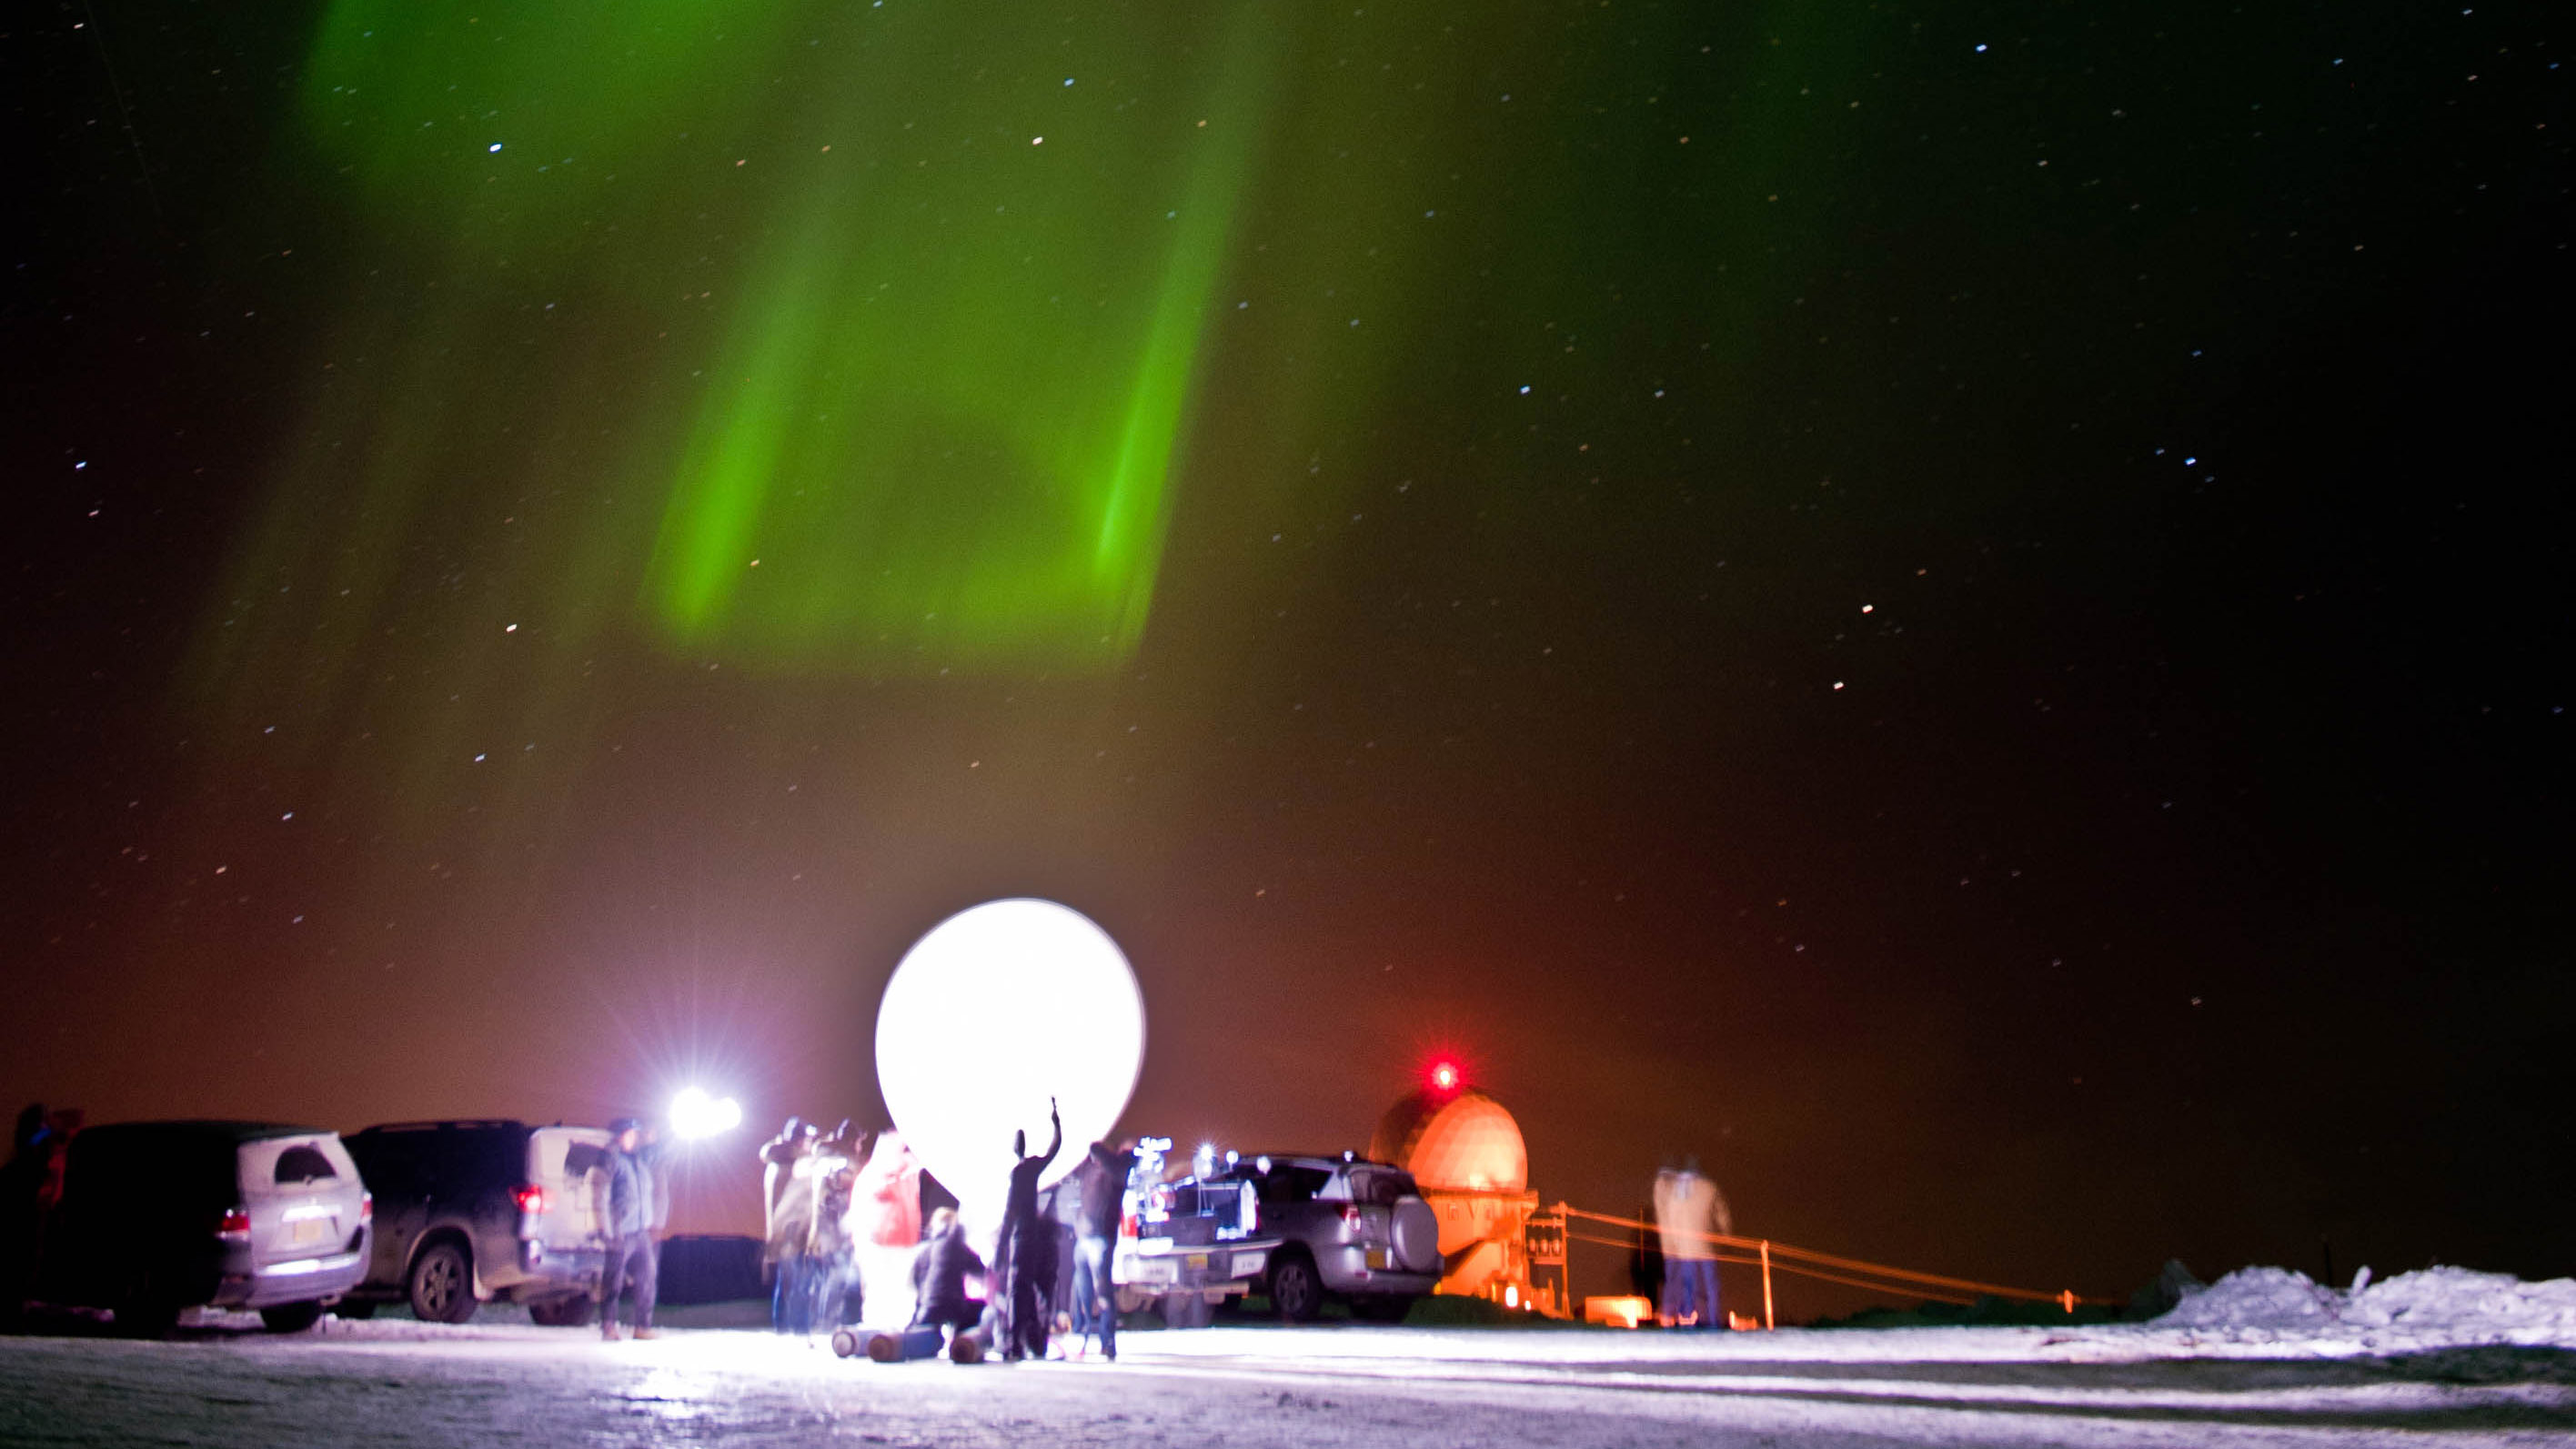 Images of Northern Lights captured with GoPro cameras TechRadar